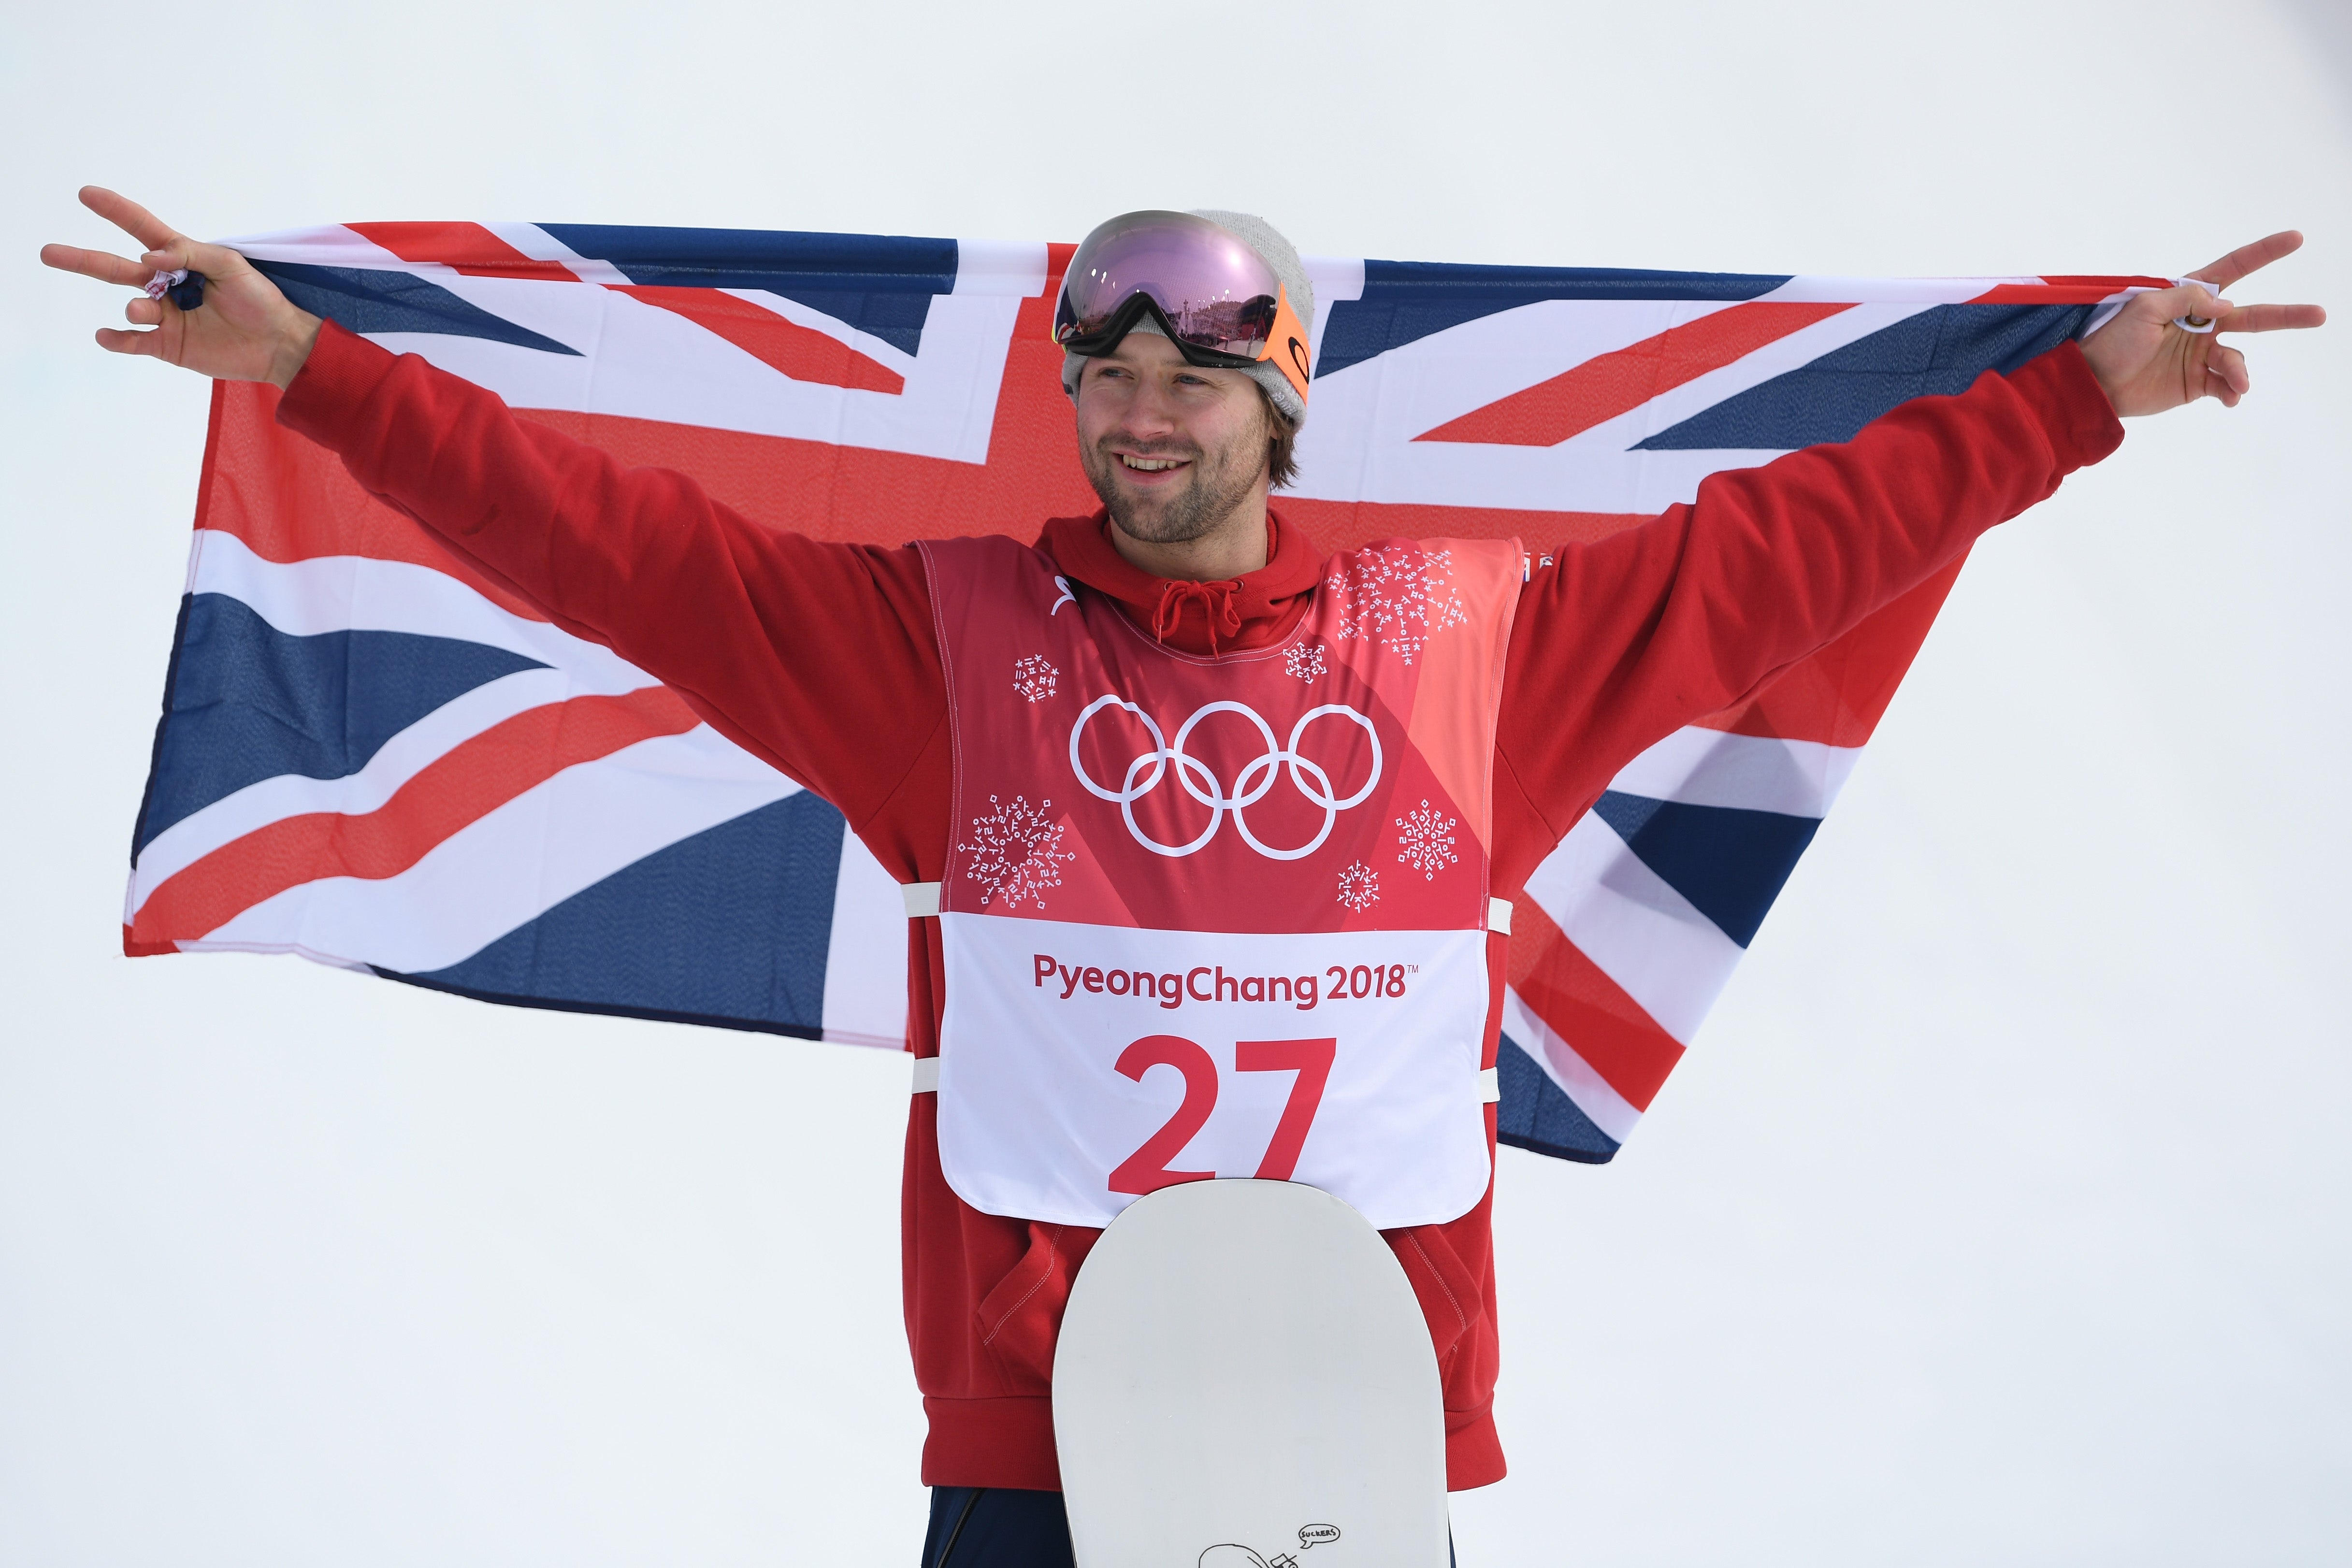 Billy Morgan won bronze in PyeongChang